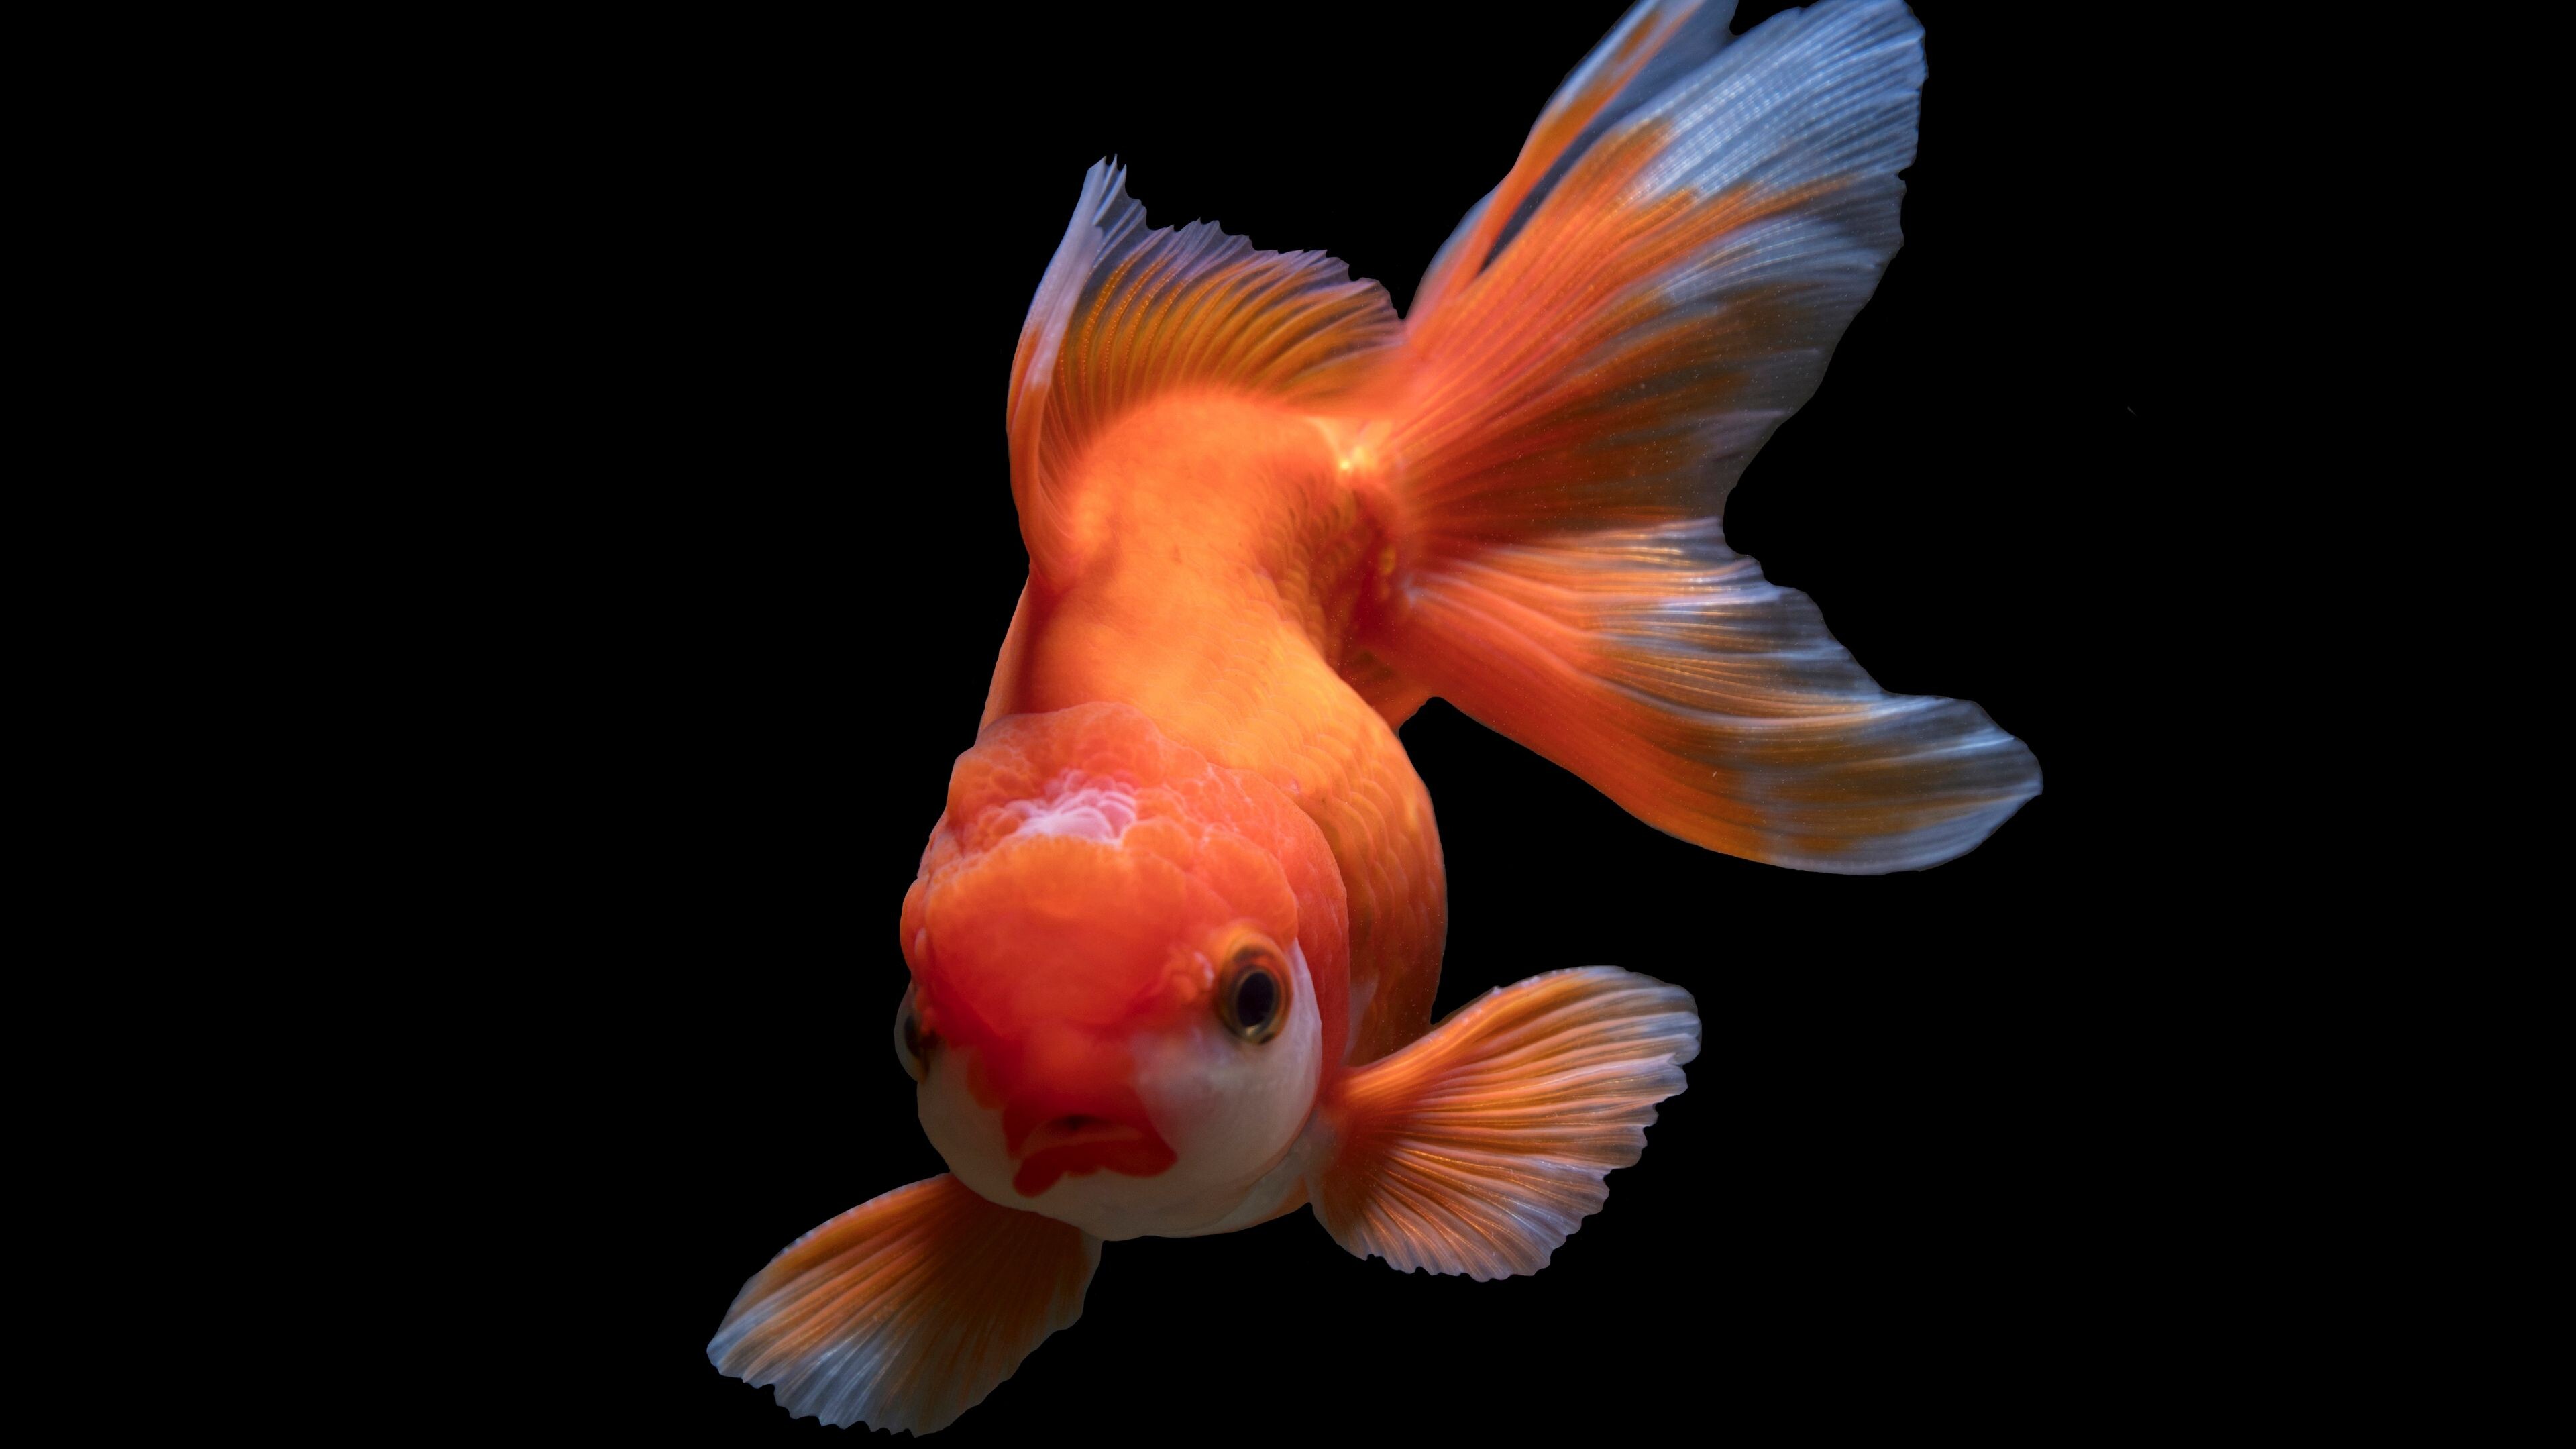 Gold Fish: Orange Oranda, The wen or crown on the head, Peaceful community fish. 3840x2160 4K Background.